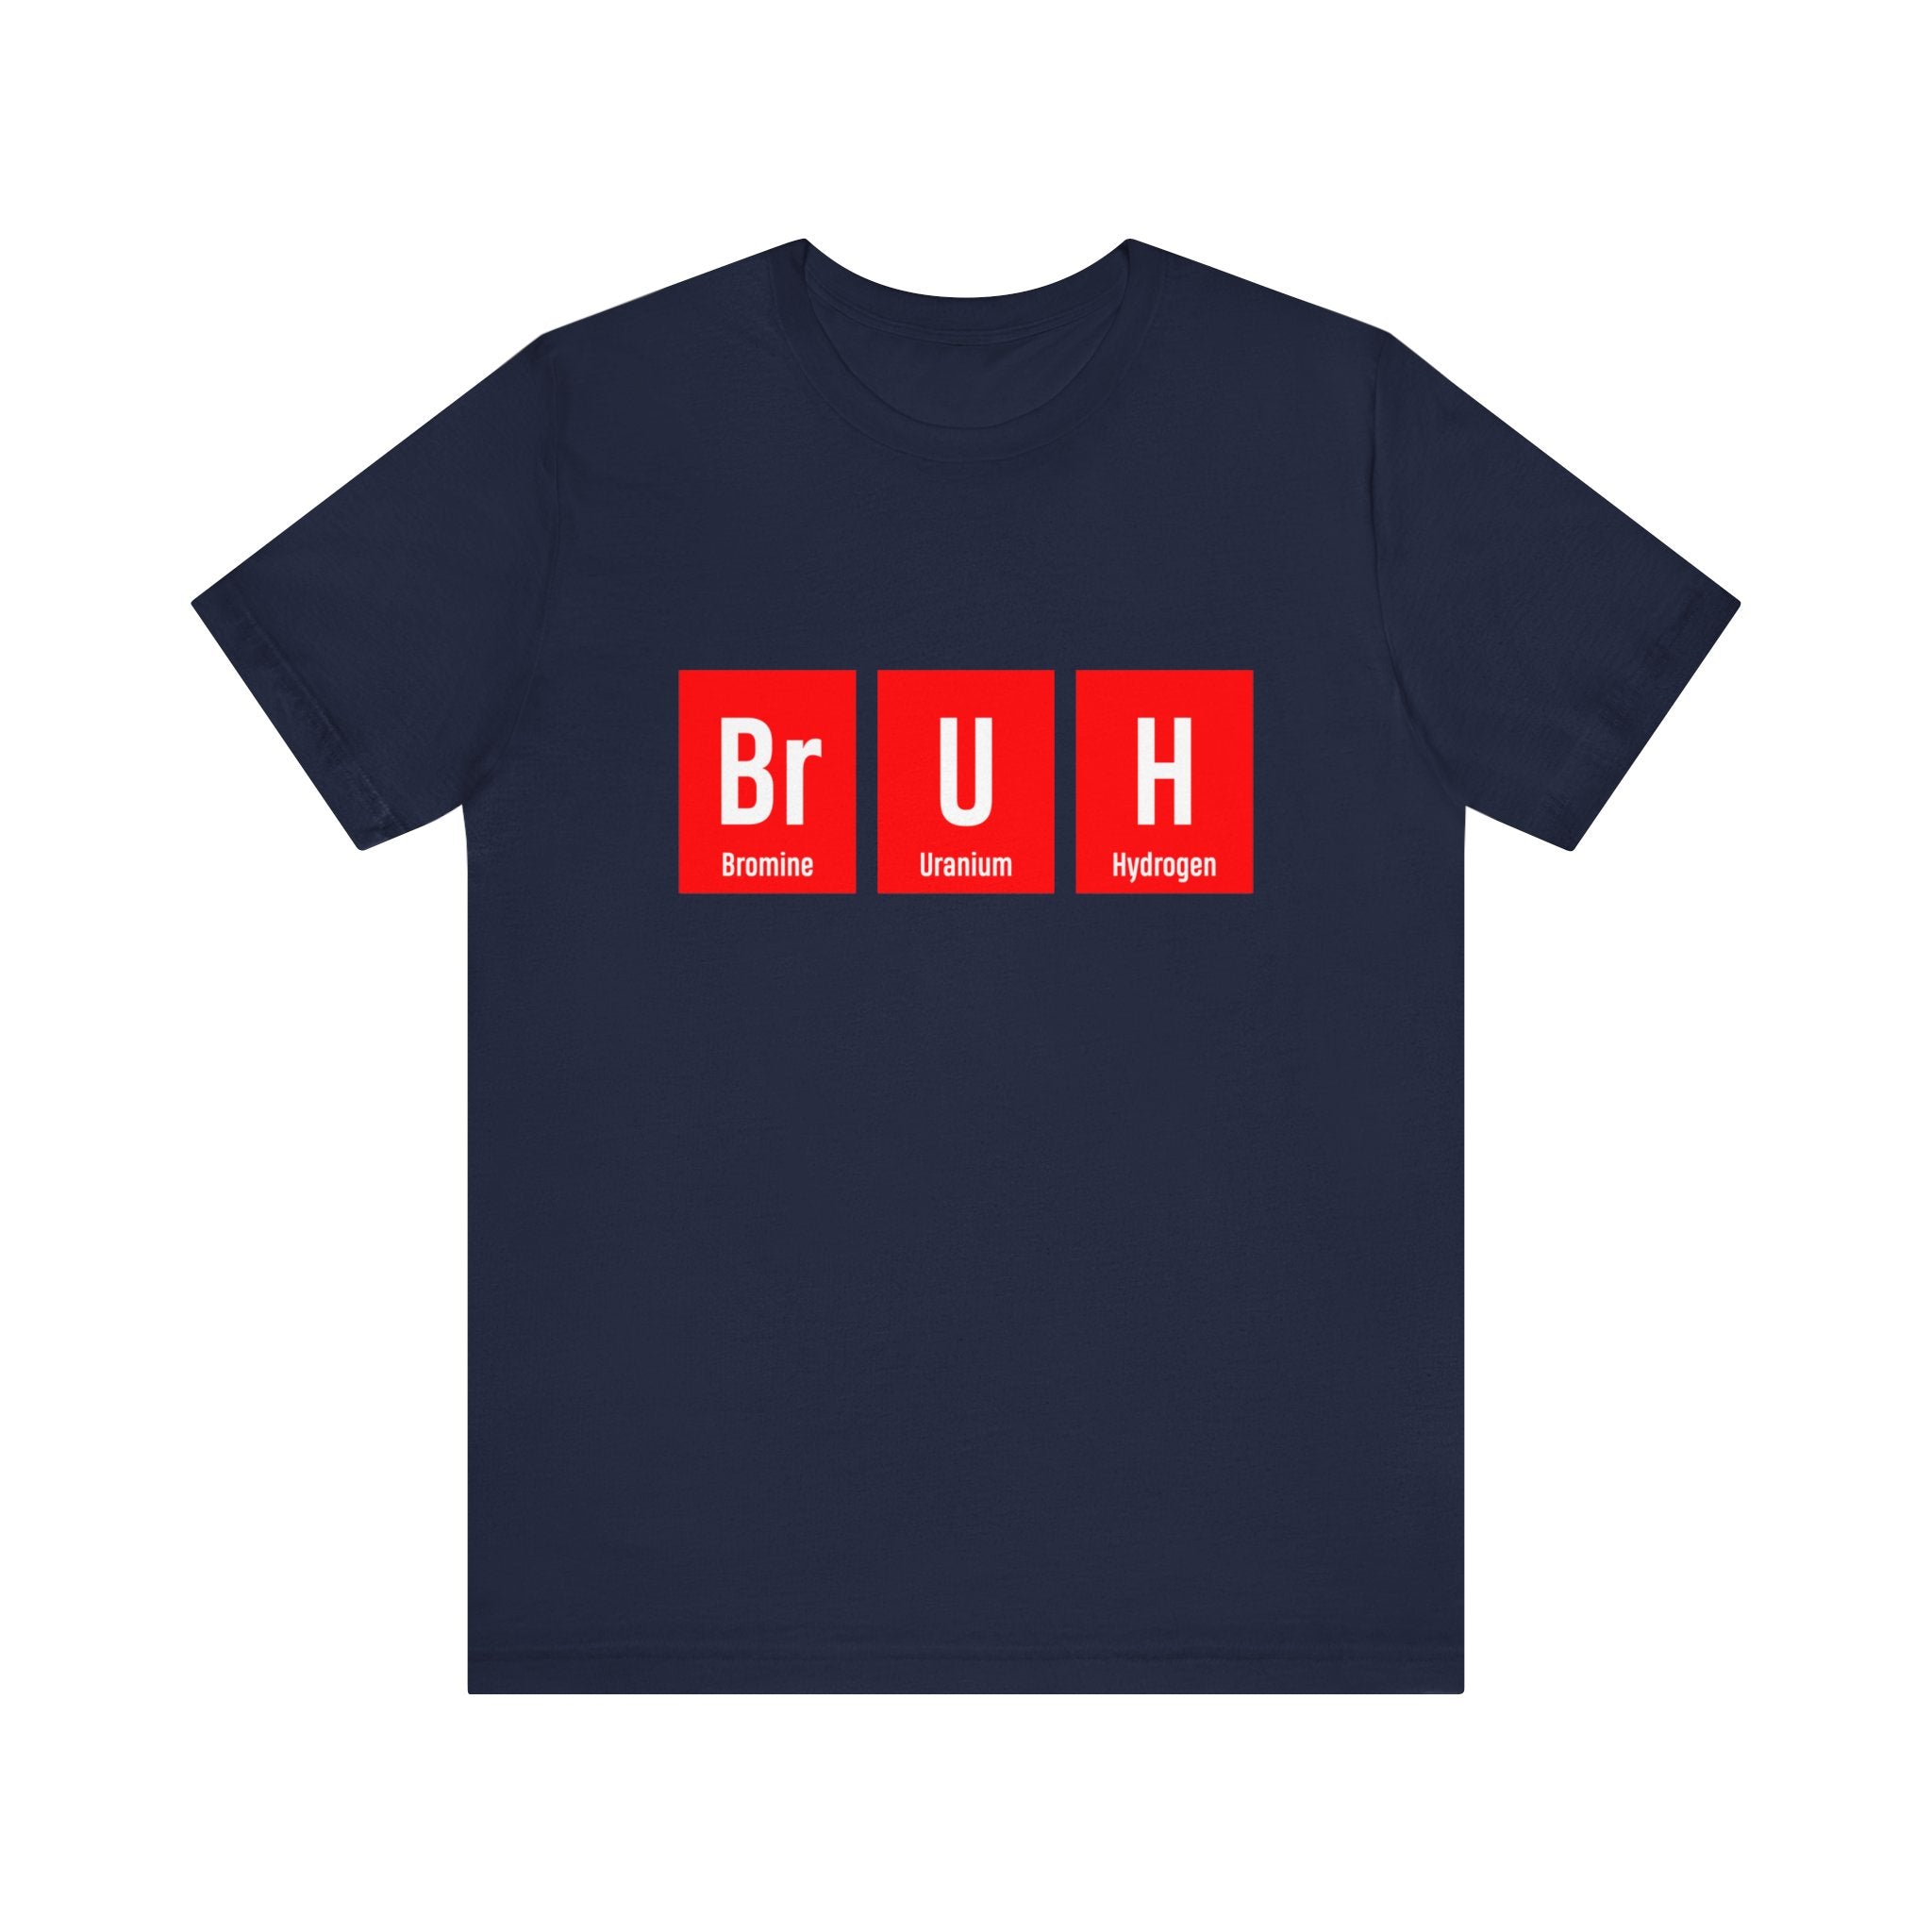 Br-U-H - T-Shirt